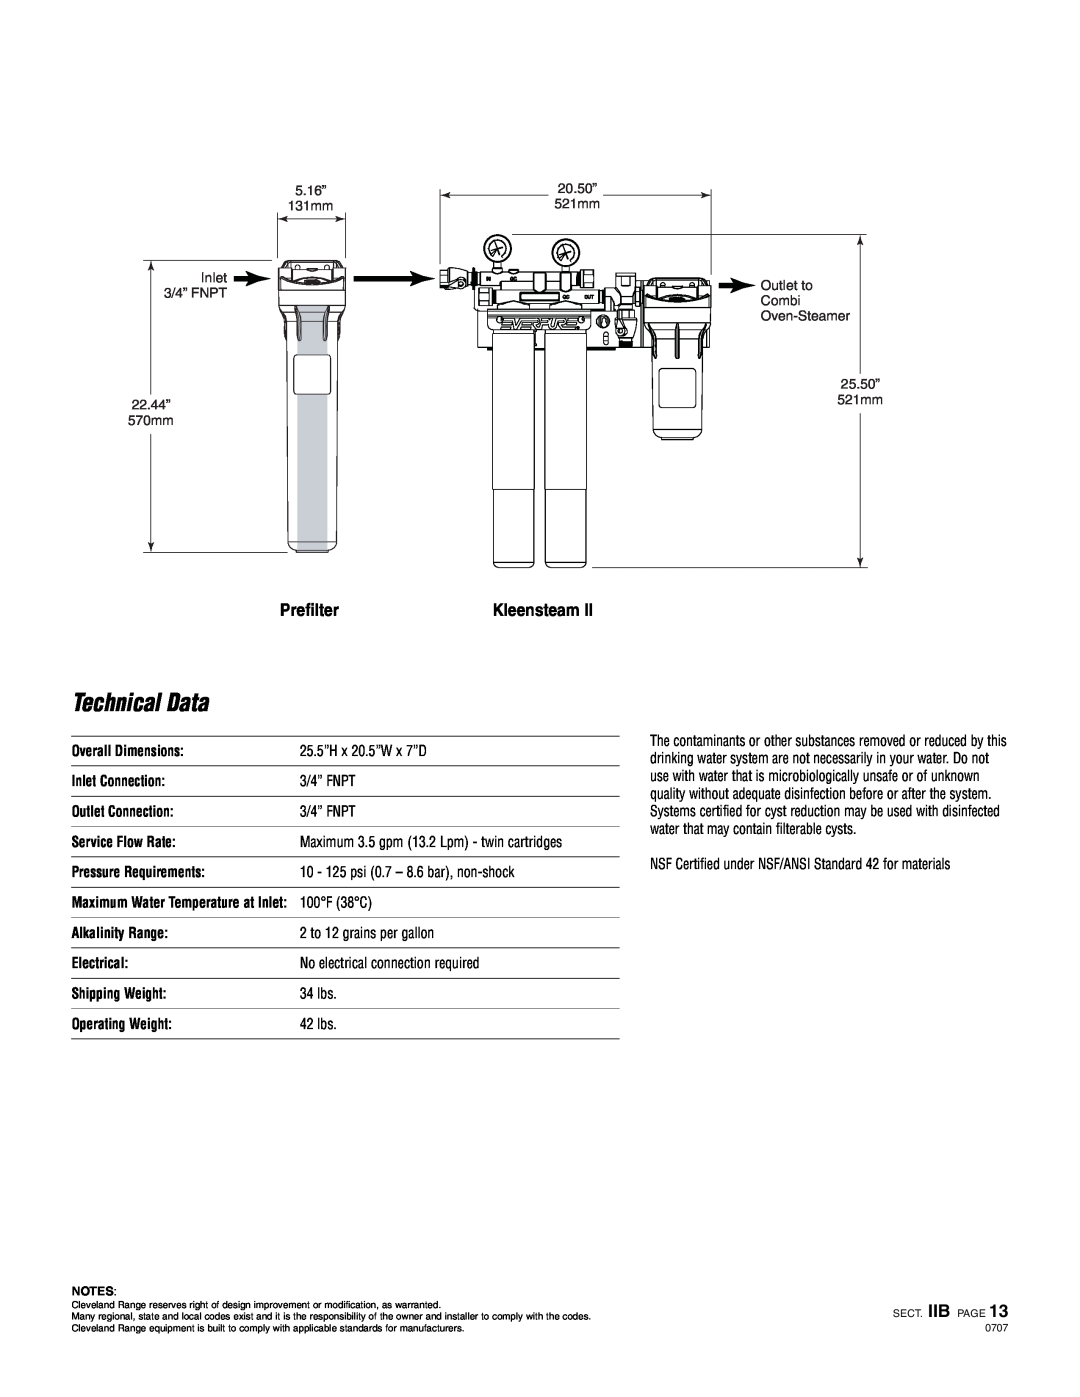 Cleveland Range C9797-K2PF specifications Technical Data, Prefilter 